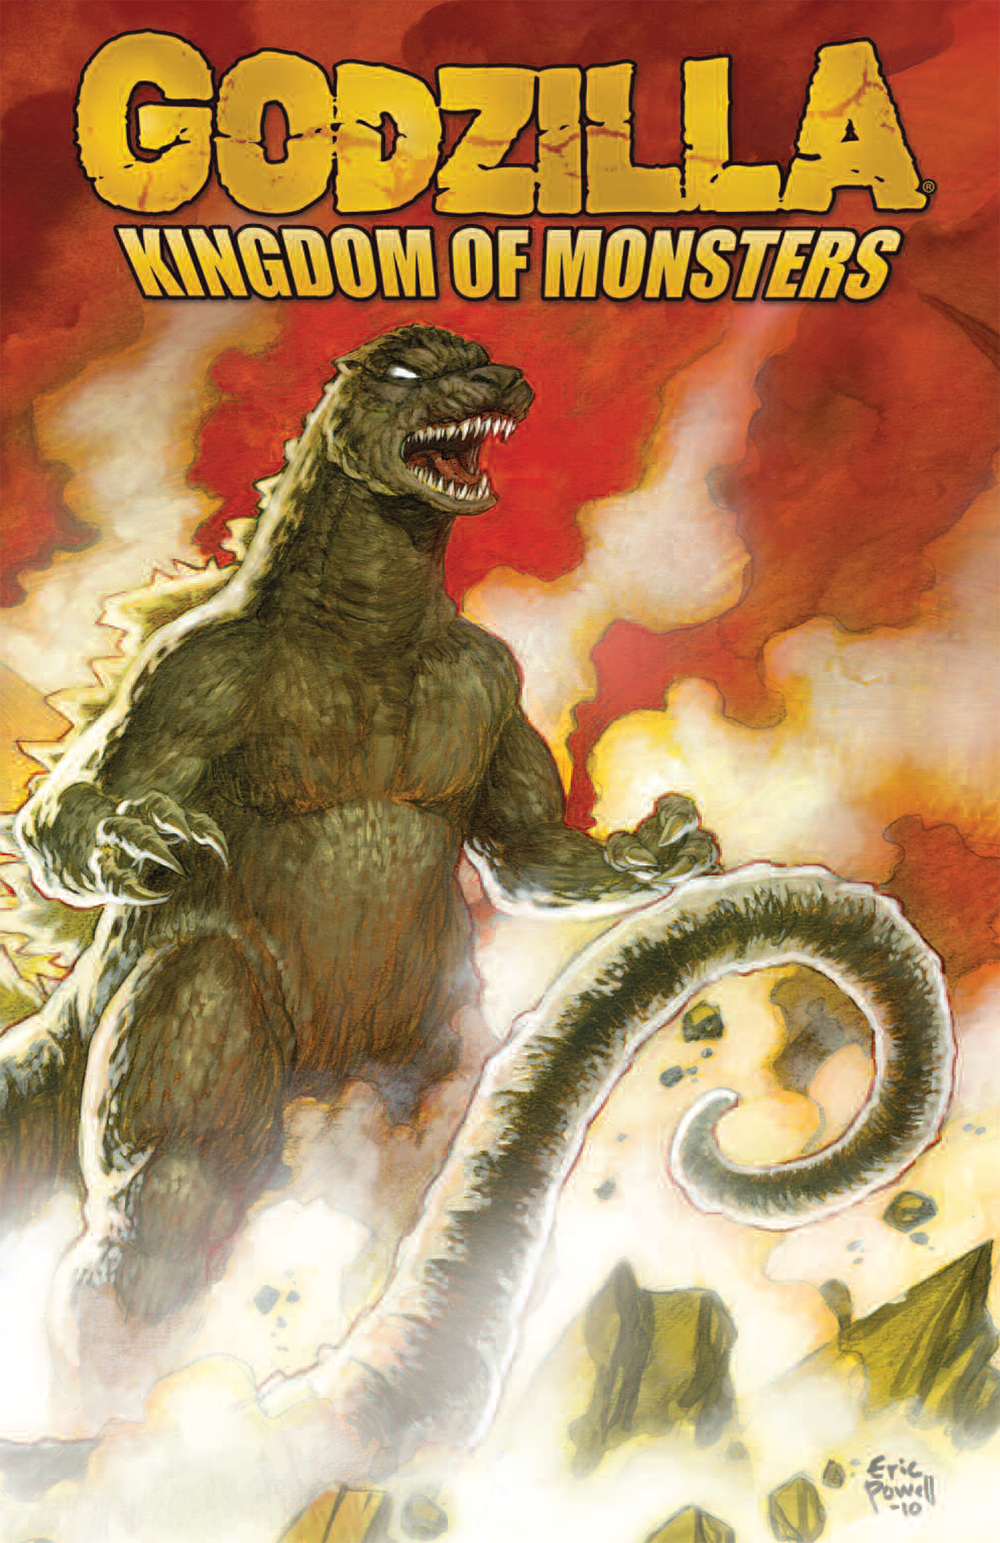 Godzilla Kingdom of Monsters Graphic Novel